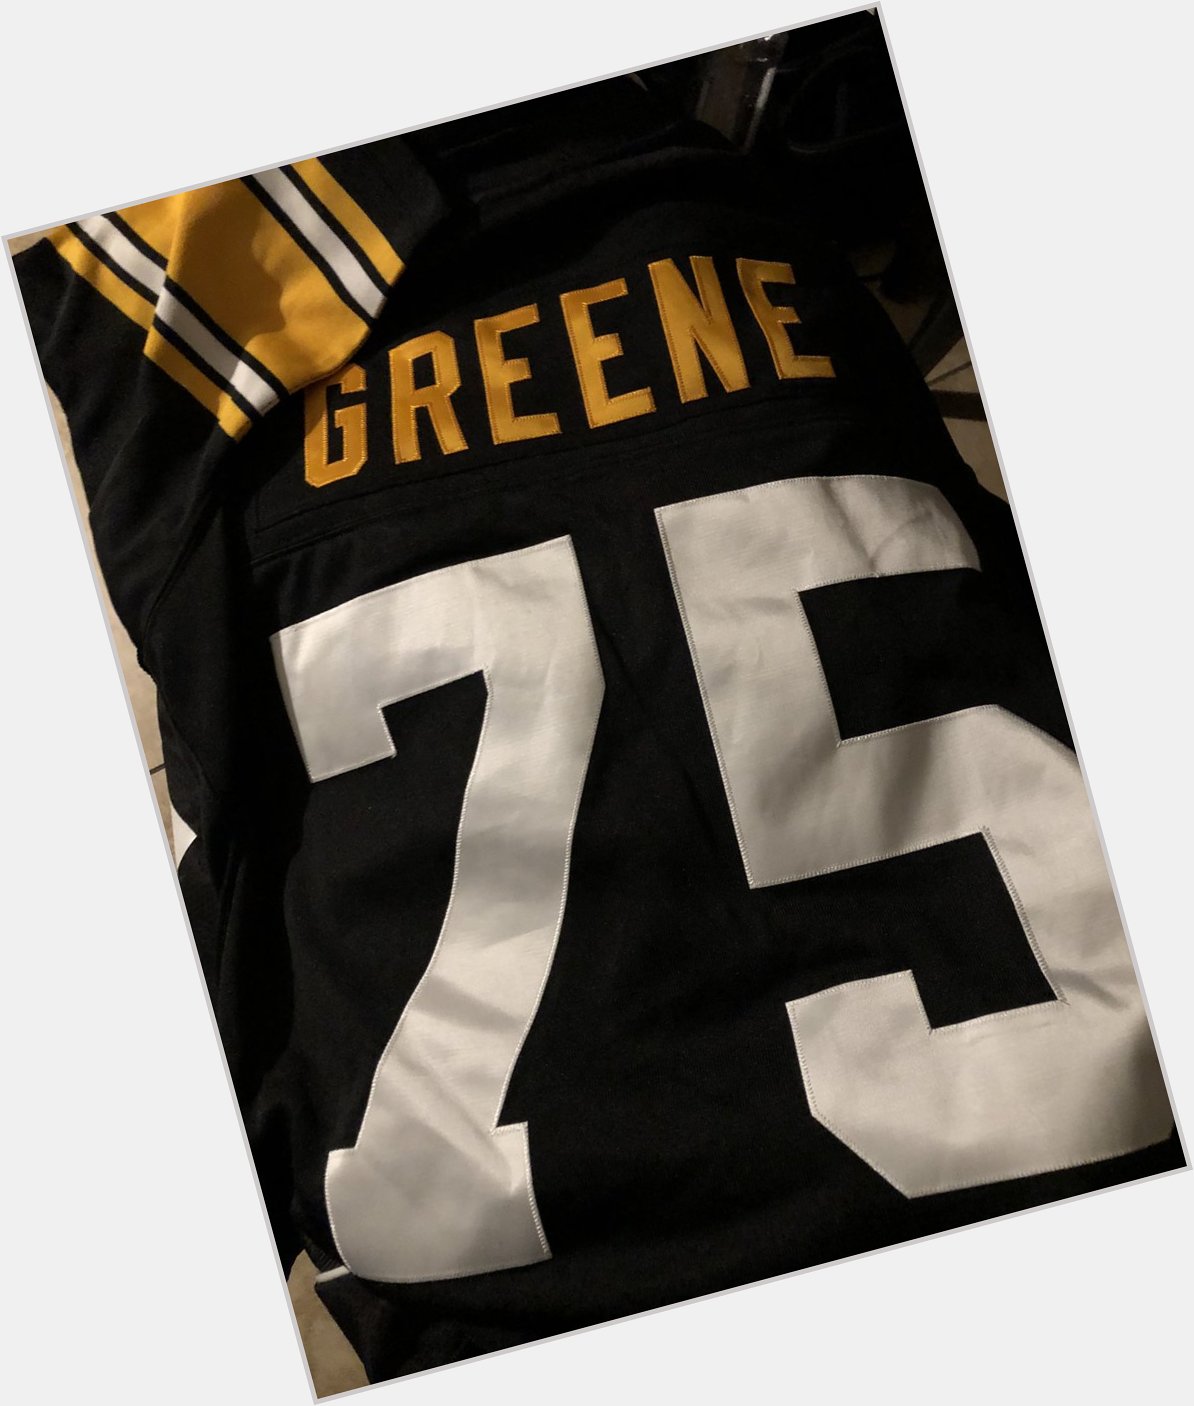 Happy 75th birthday Joe Greene    